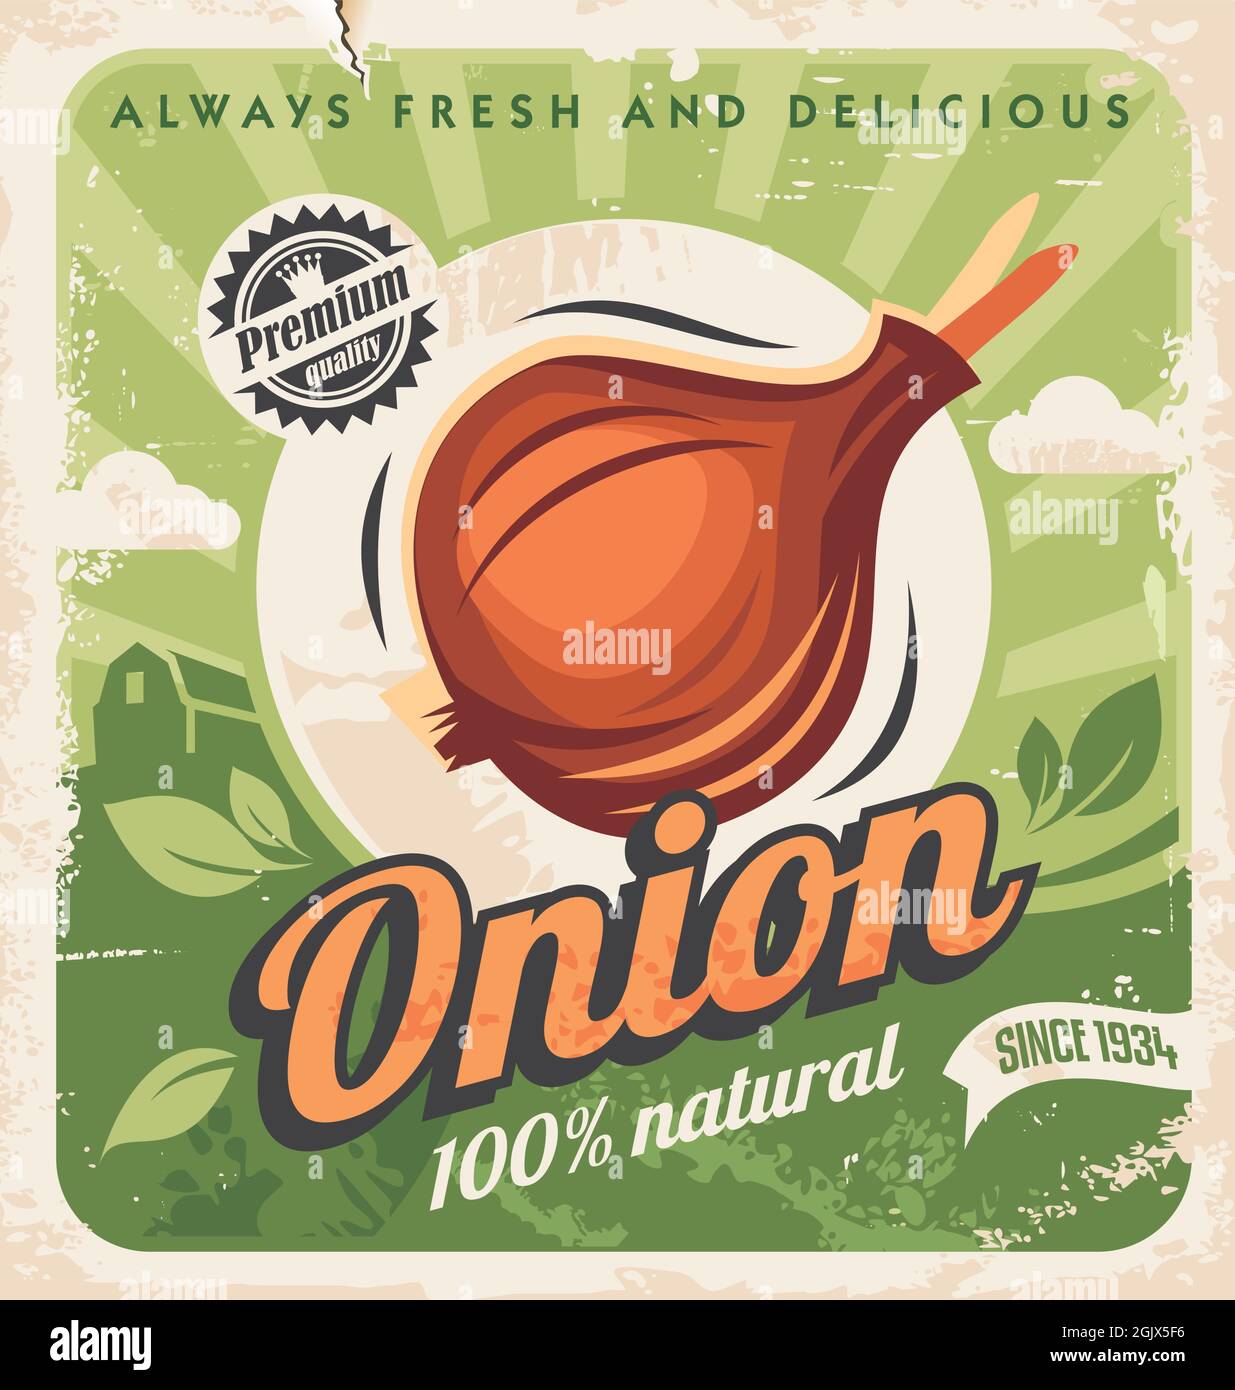 Onion farm vintage poster design. Farm fresh product retro advertisement on old paper texture. Onion vector image Stock Vector